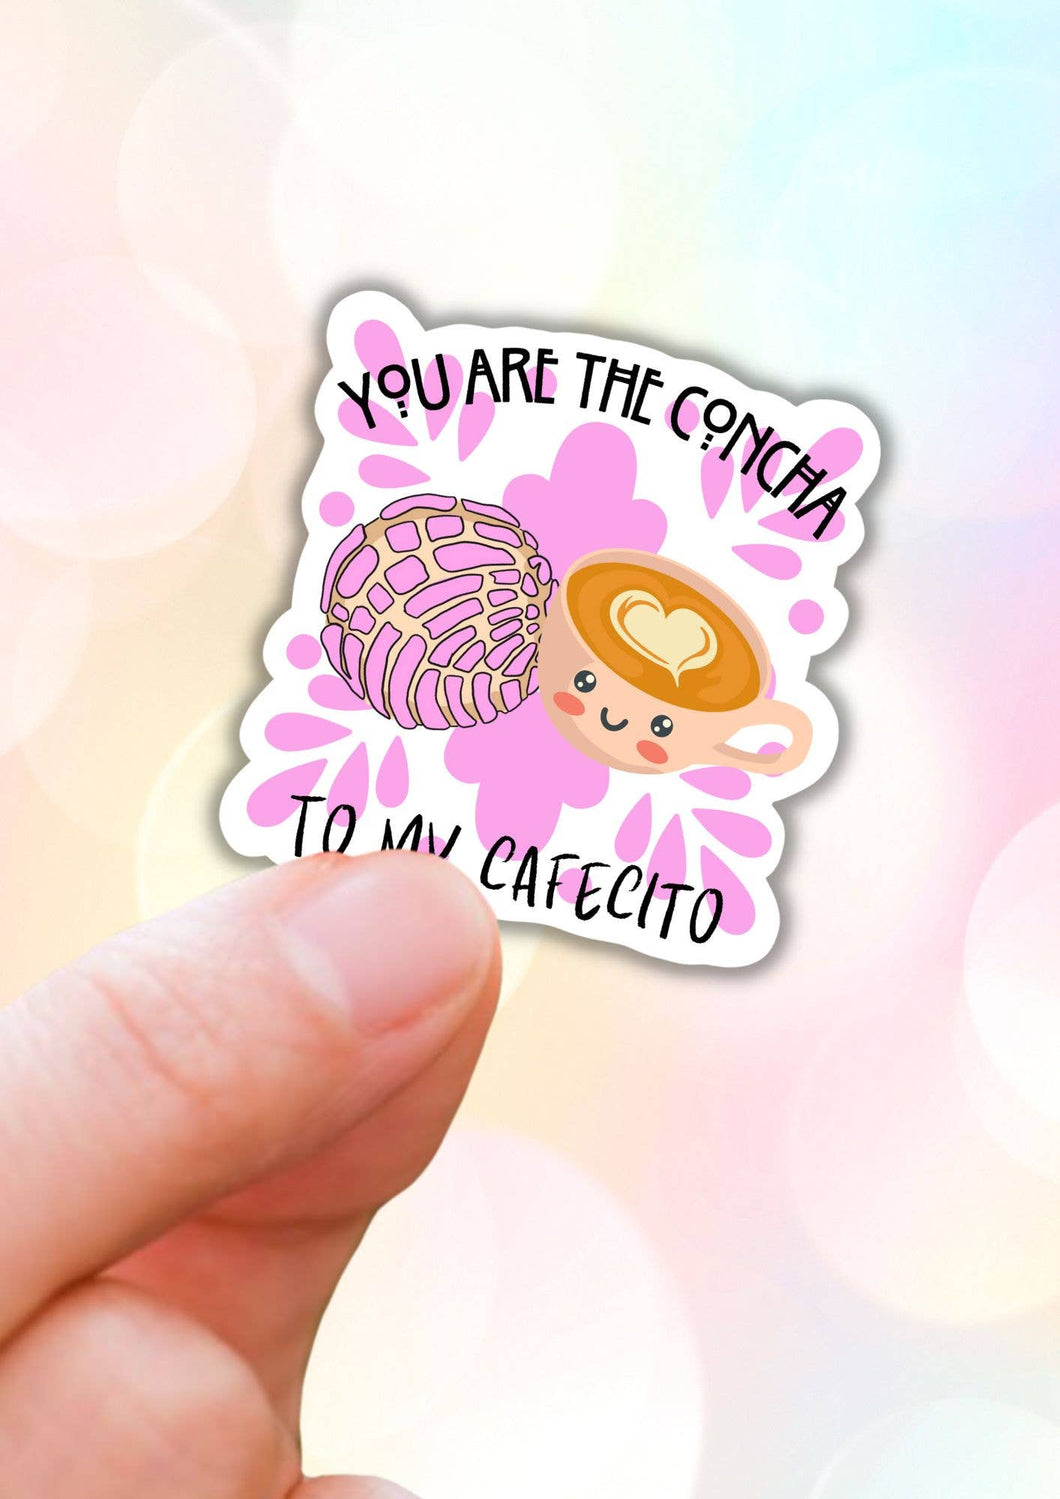 You are the concha to my cafecito kawaii sticker